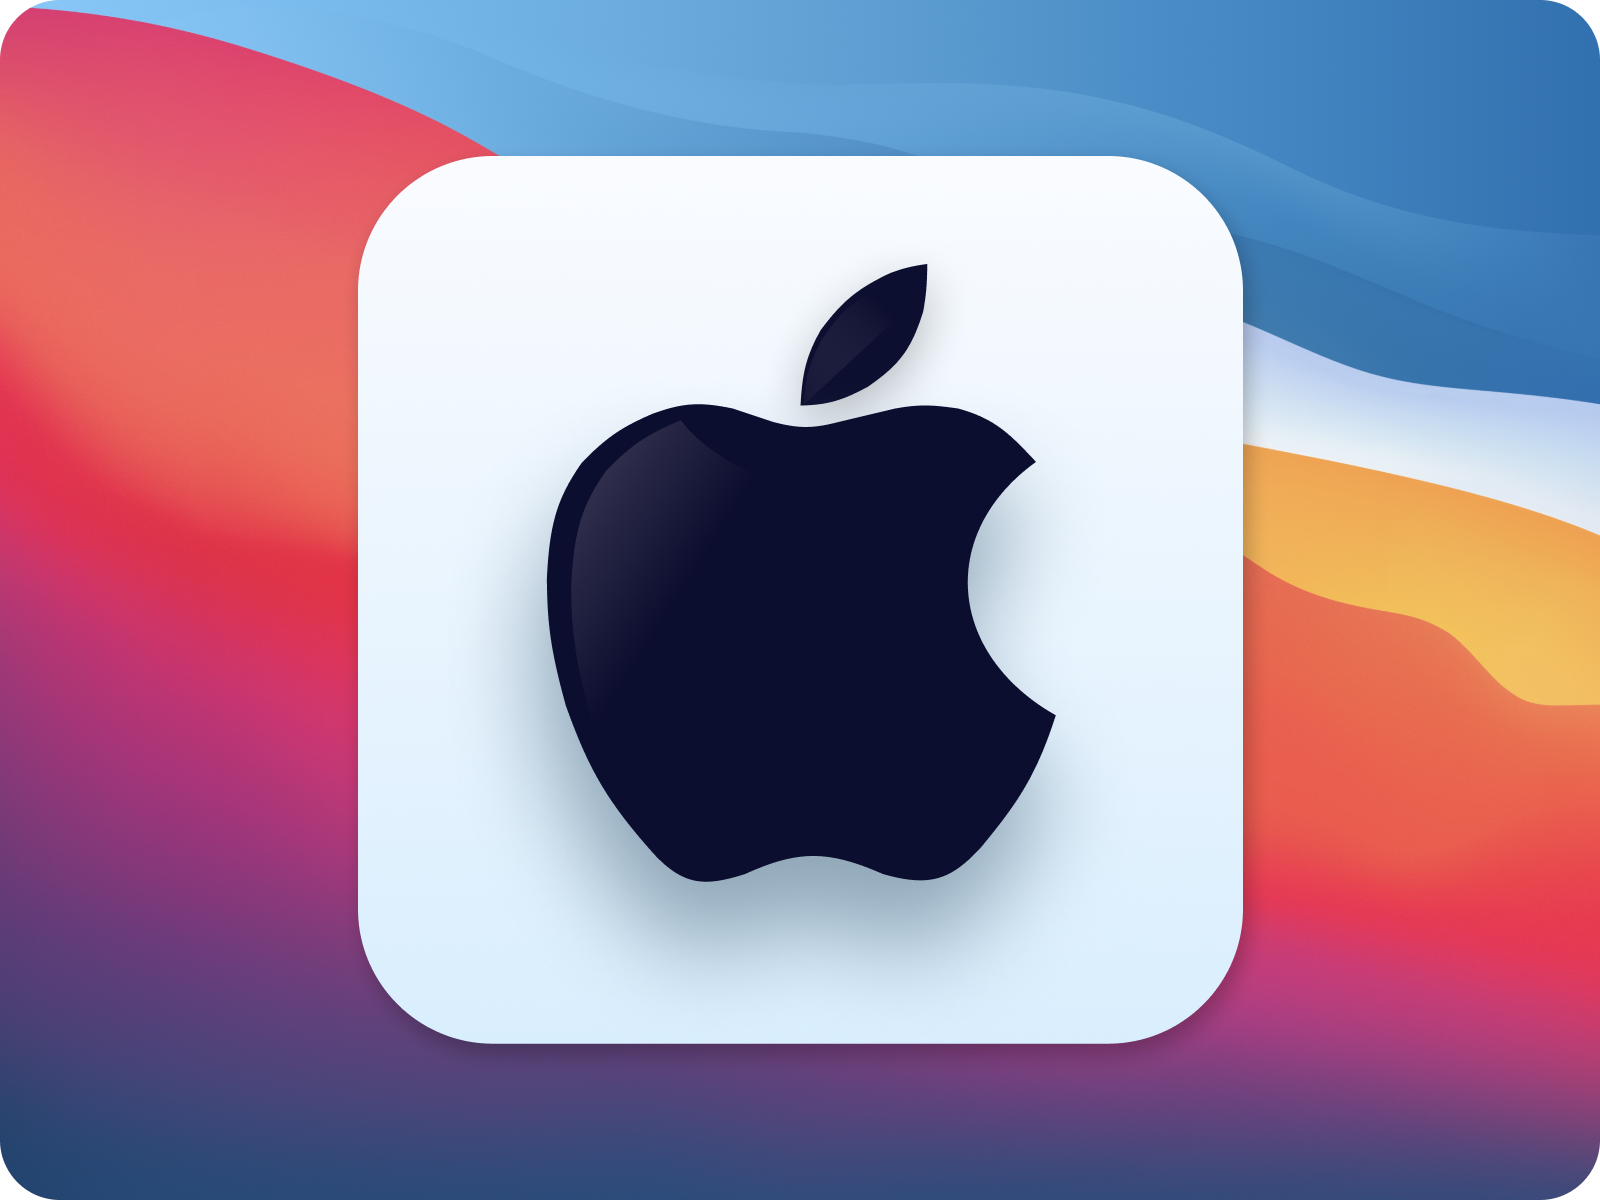 Apple Logo by Mohit on Dribbble